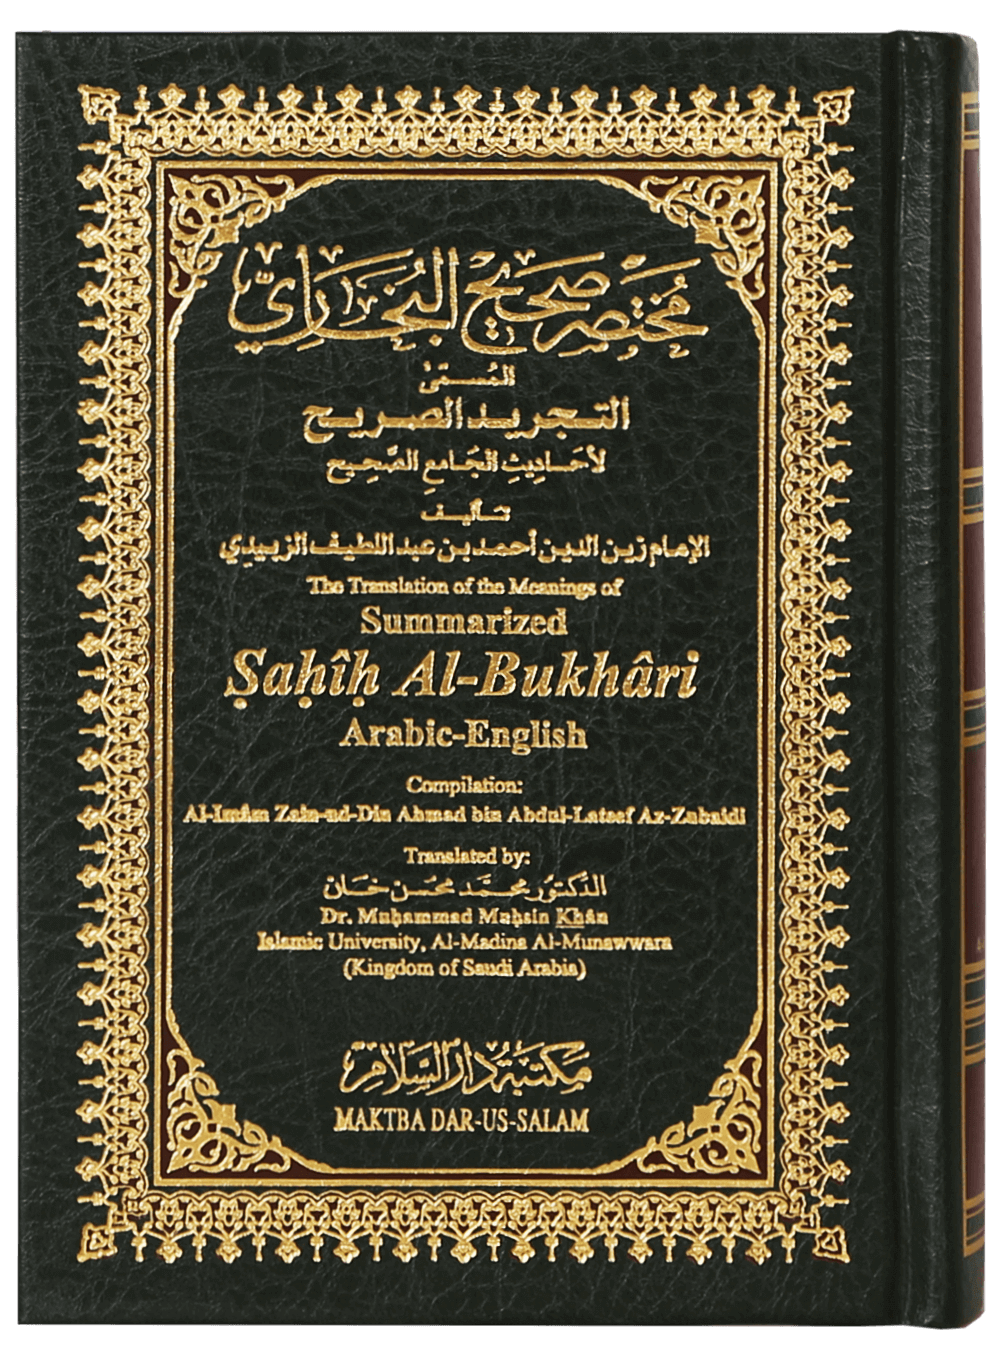 Summarized Sahih Al-Bukhari Small